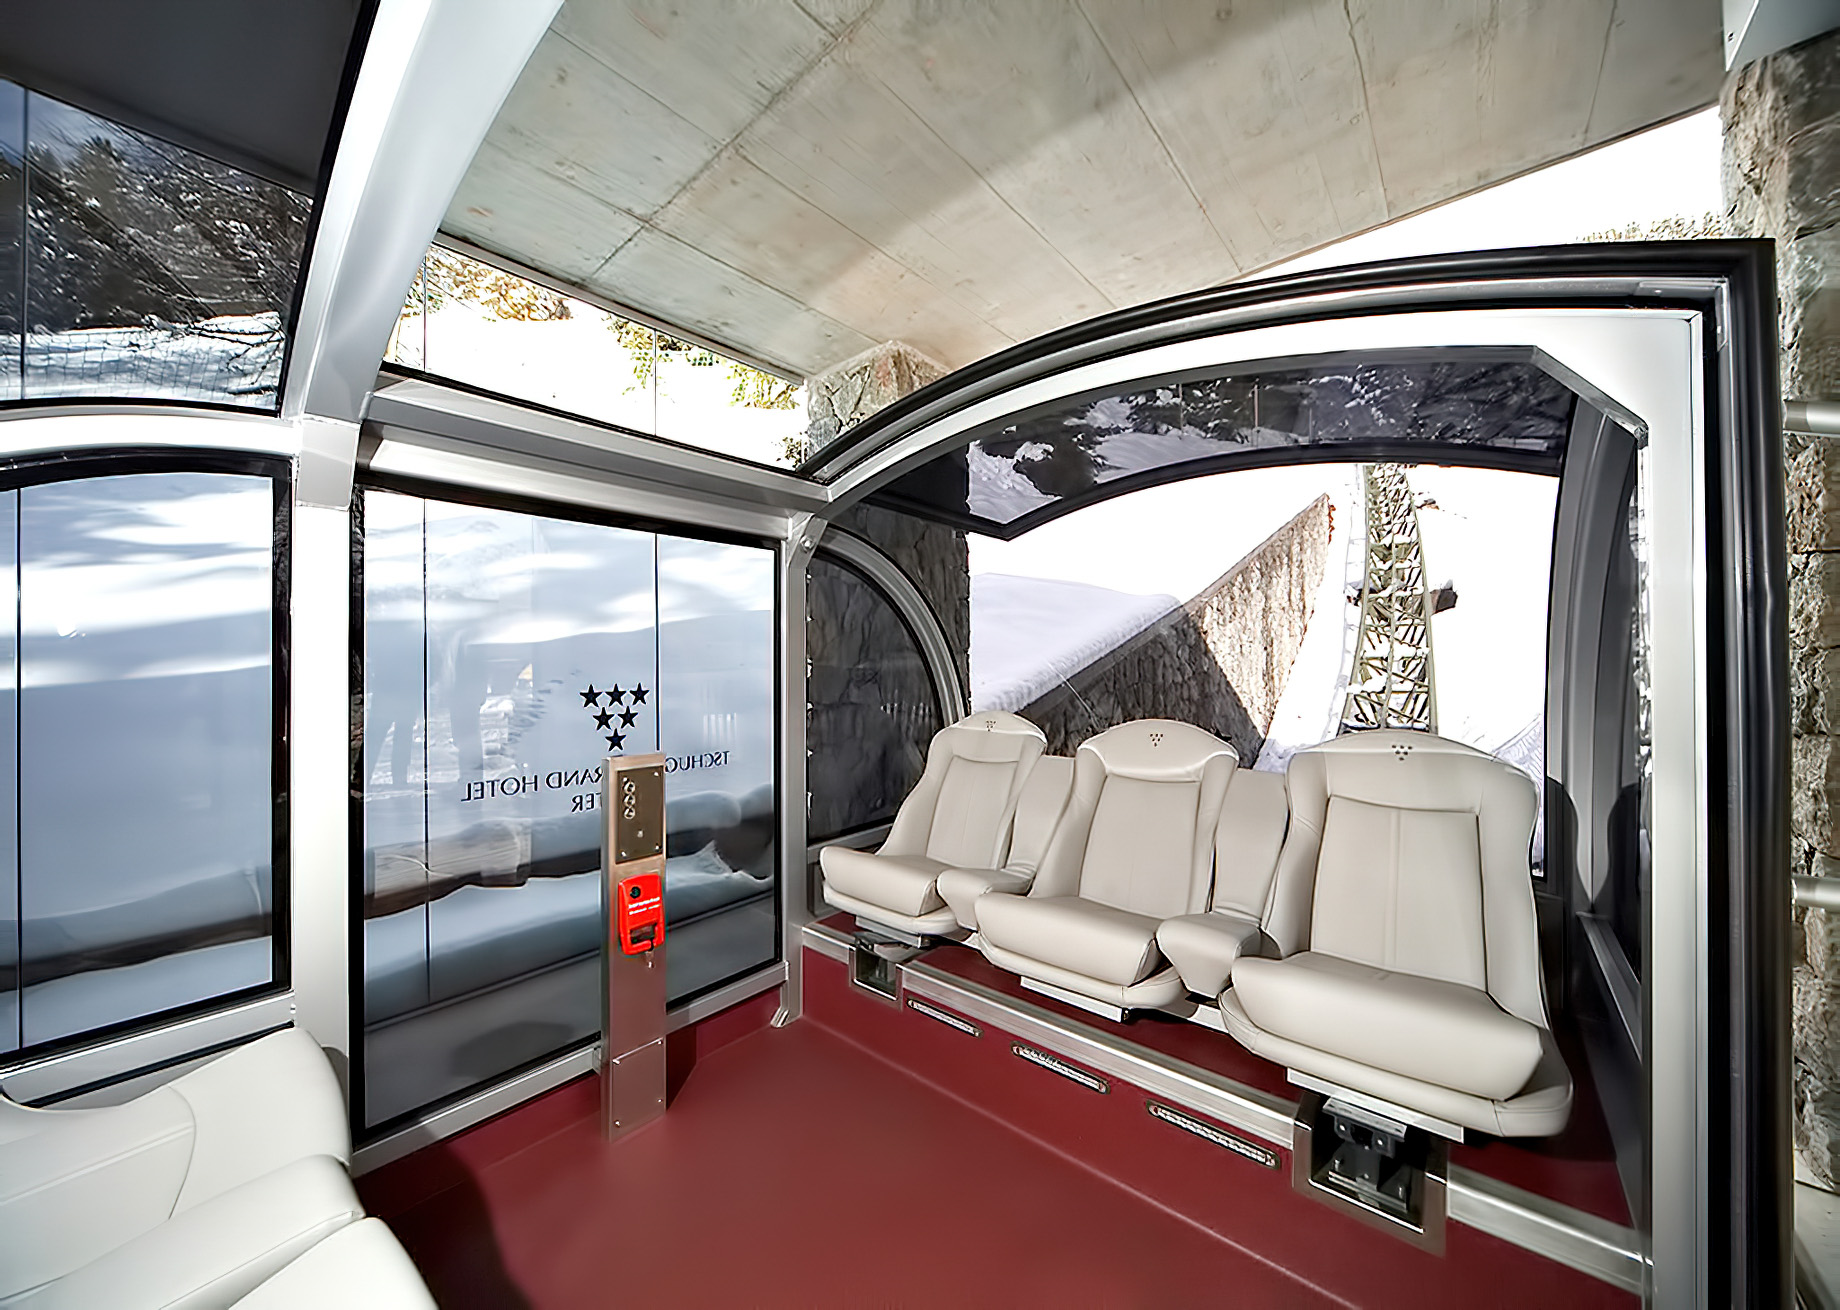 Tschuggen Grand Hotel – Arosa, Switzerland – Sky Tram Car Interior